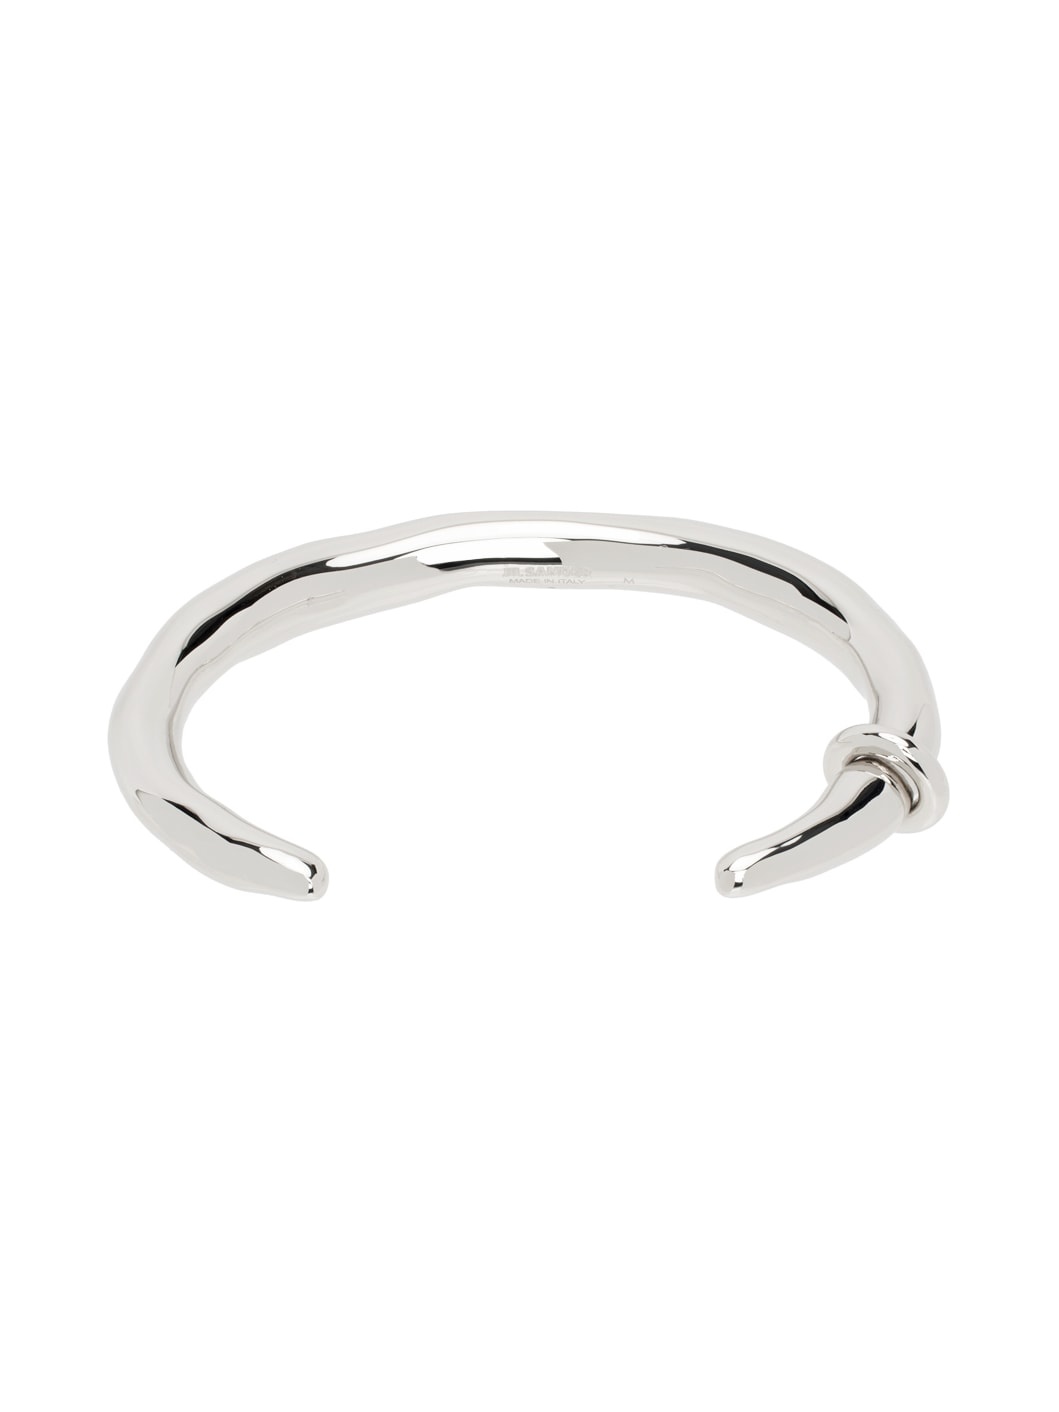 Silver Cuff Bracelet - 2